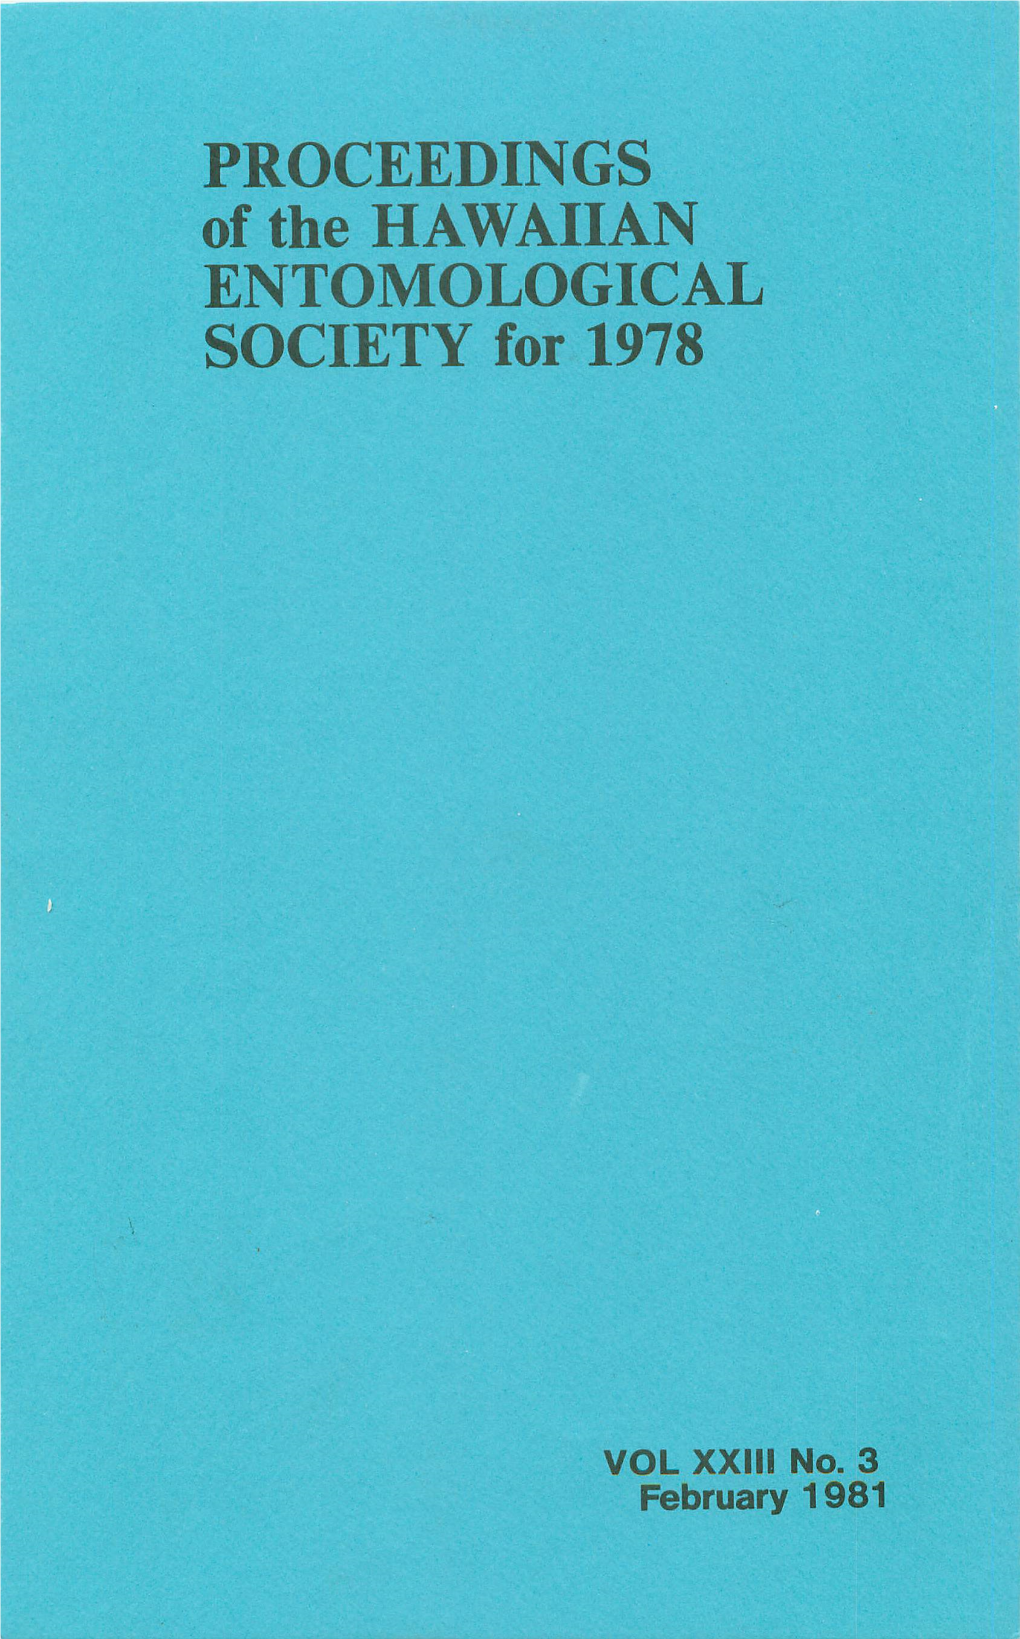 PROCEEDINGS of the HAWAIIAN ENTOMOLOGICAL SOCIETY for 1978